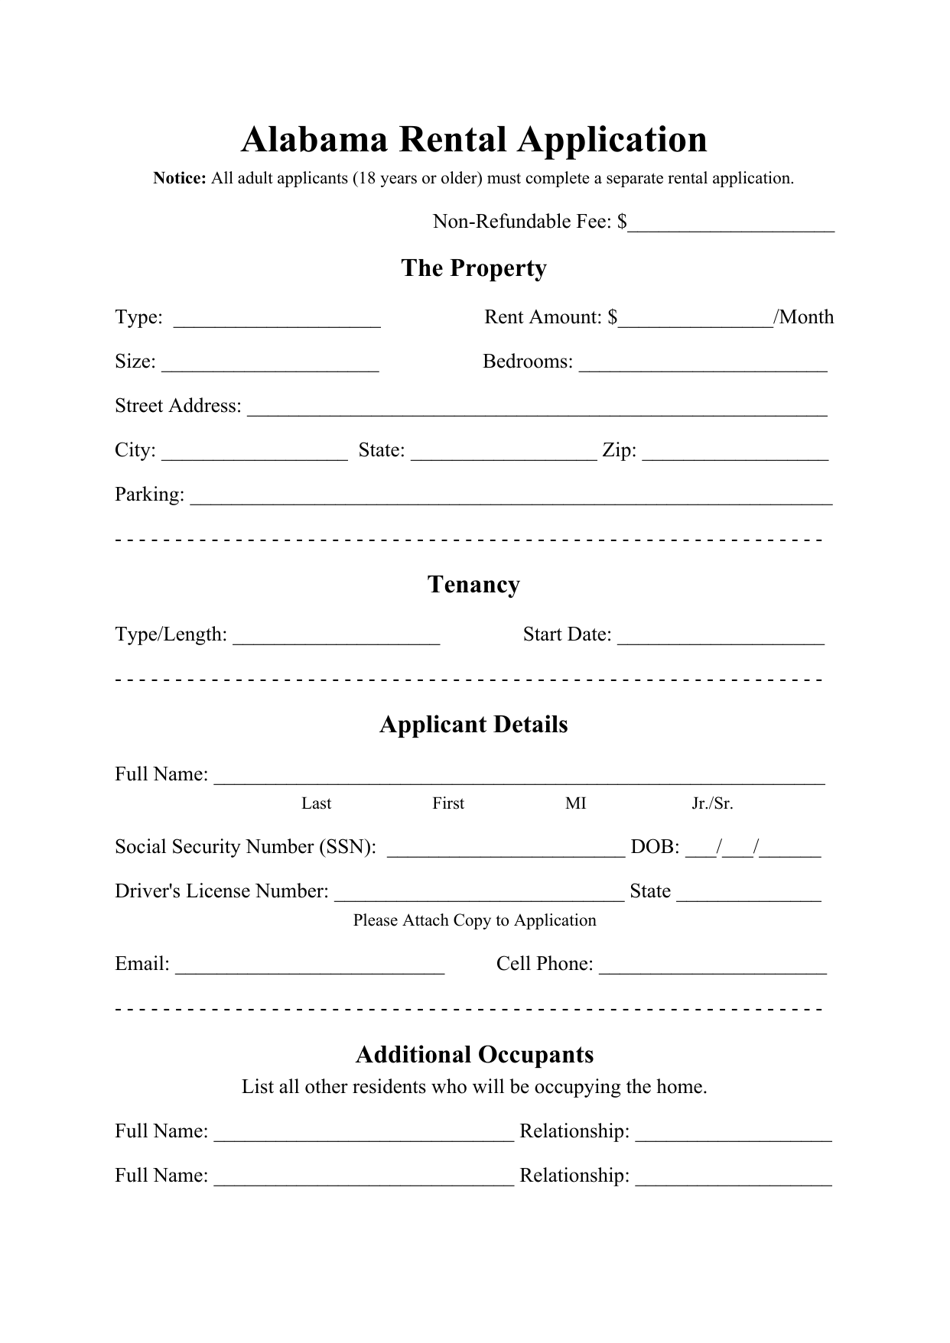 Rental Application Form - Alabama, Page 1